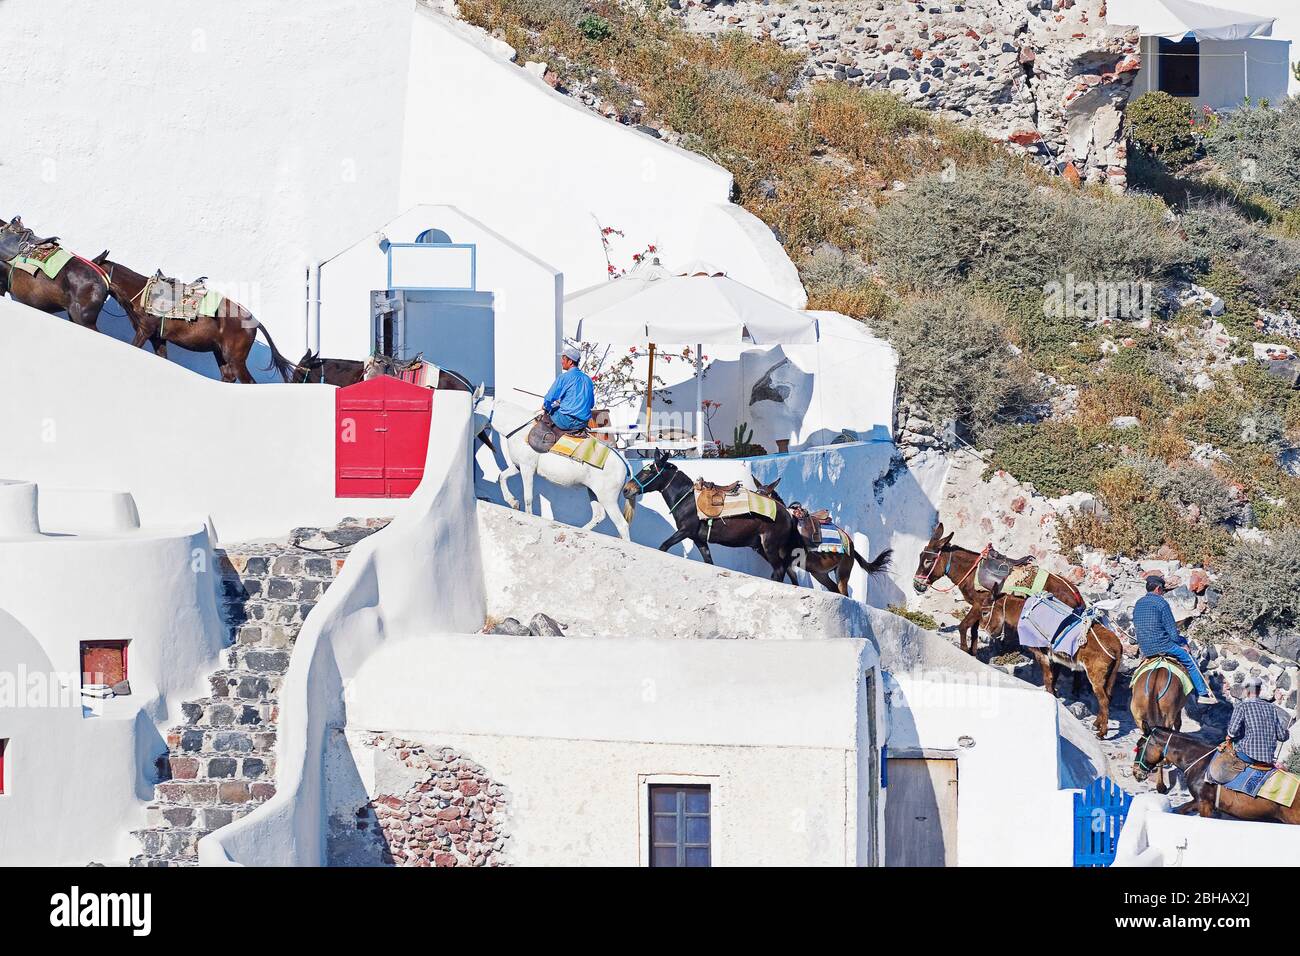 Leute reiten Maultiere eine Treppe hinauf, Oia, Santorini, Kykladen Inseln, Griechenland Stockfoto